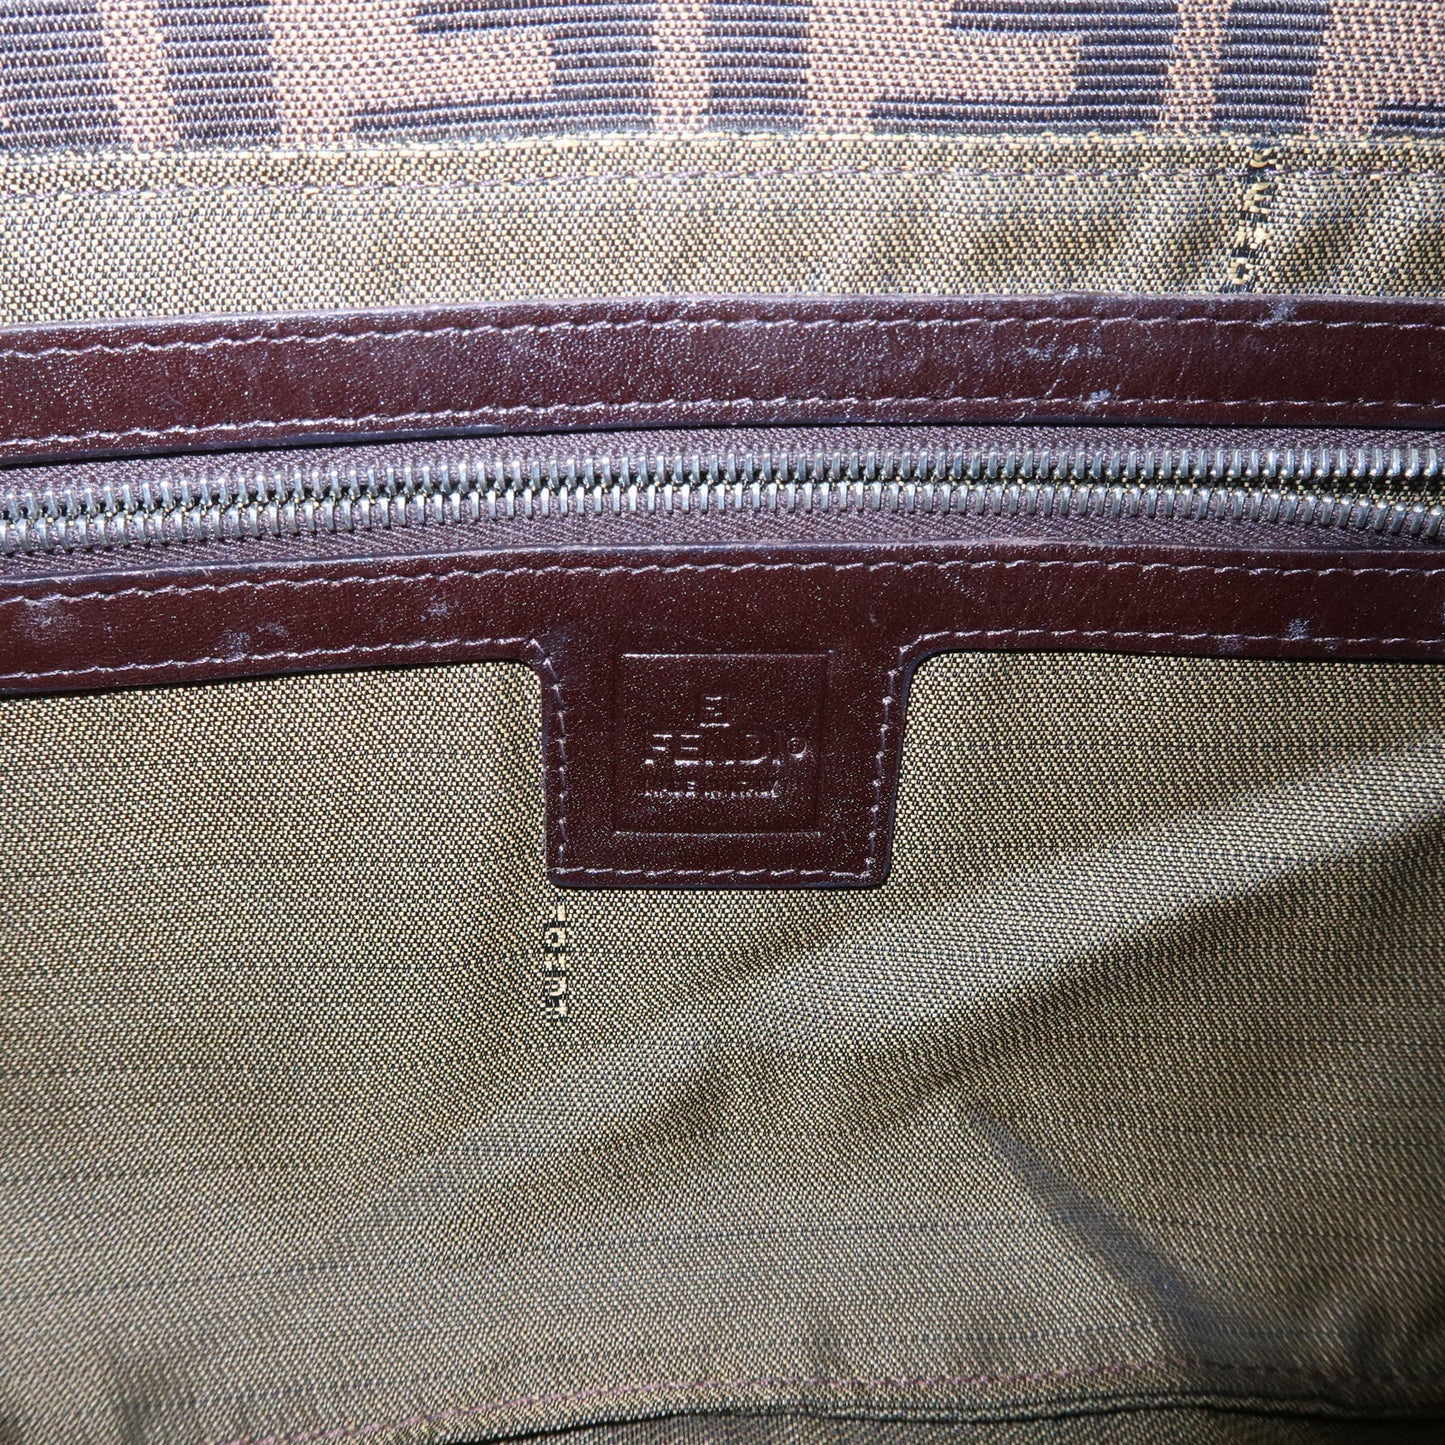 AuthenticFENDI Zucca Canvas Leather Shoulder Bag Brown Black 26569